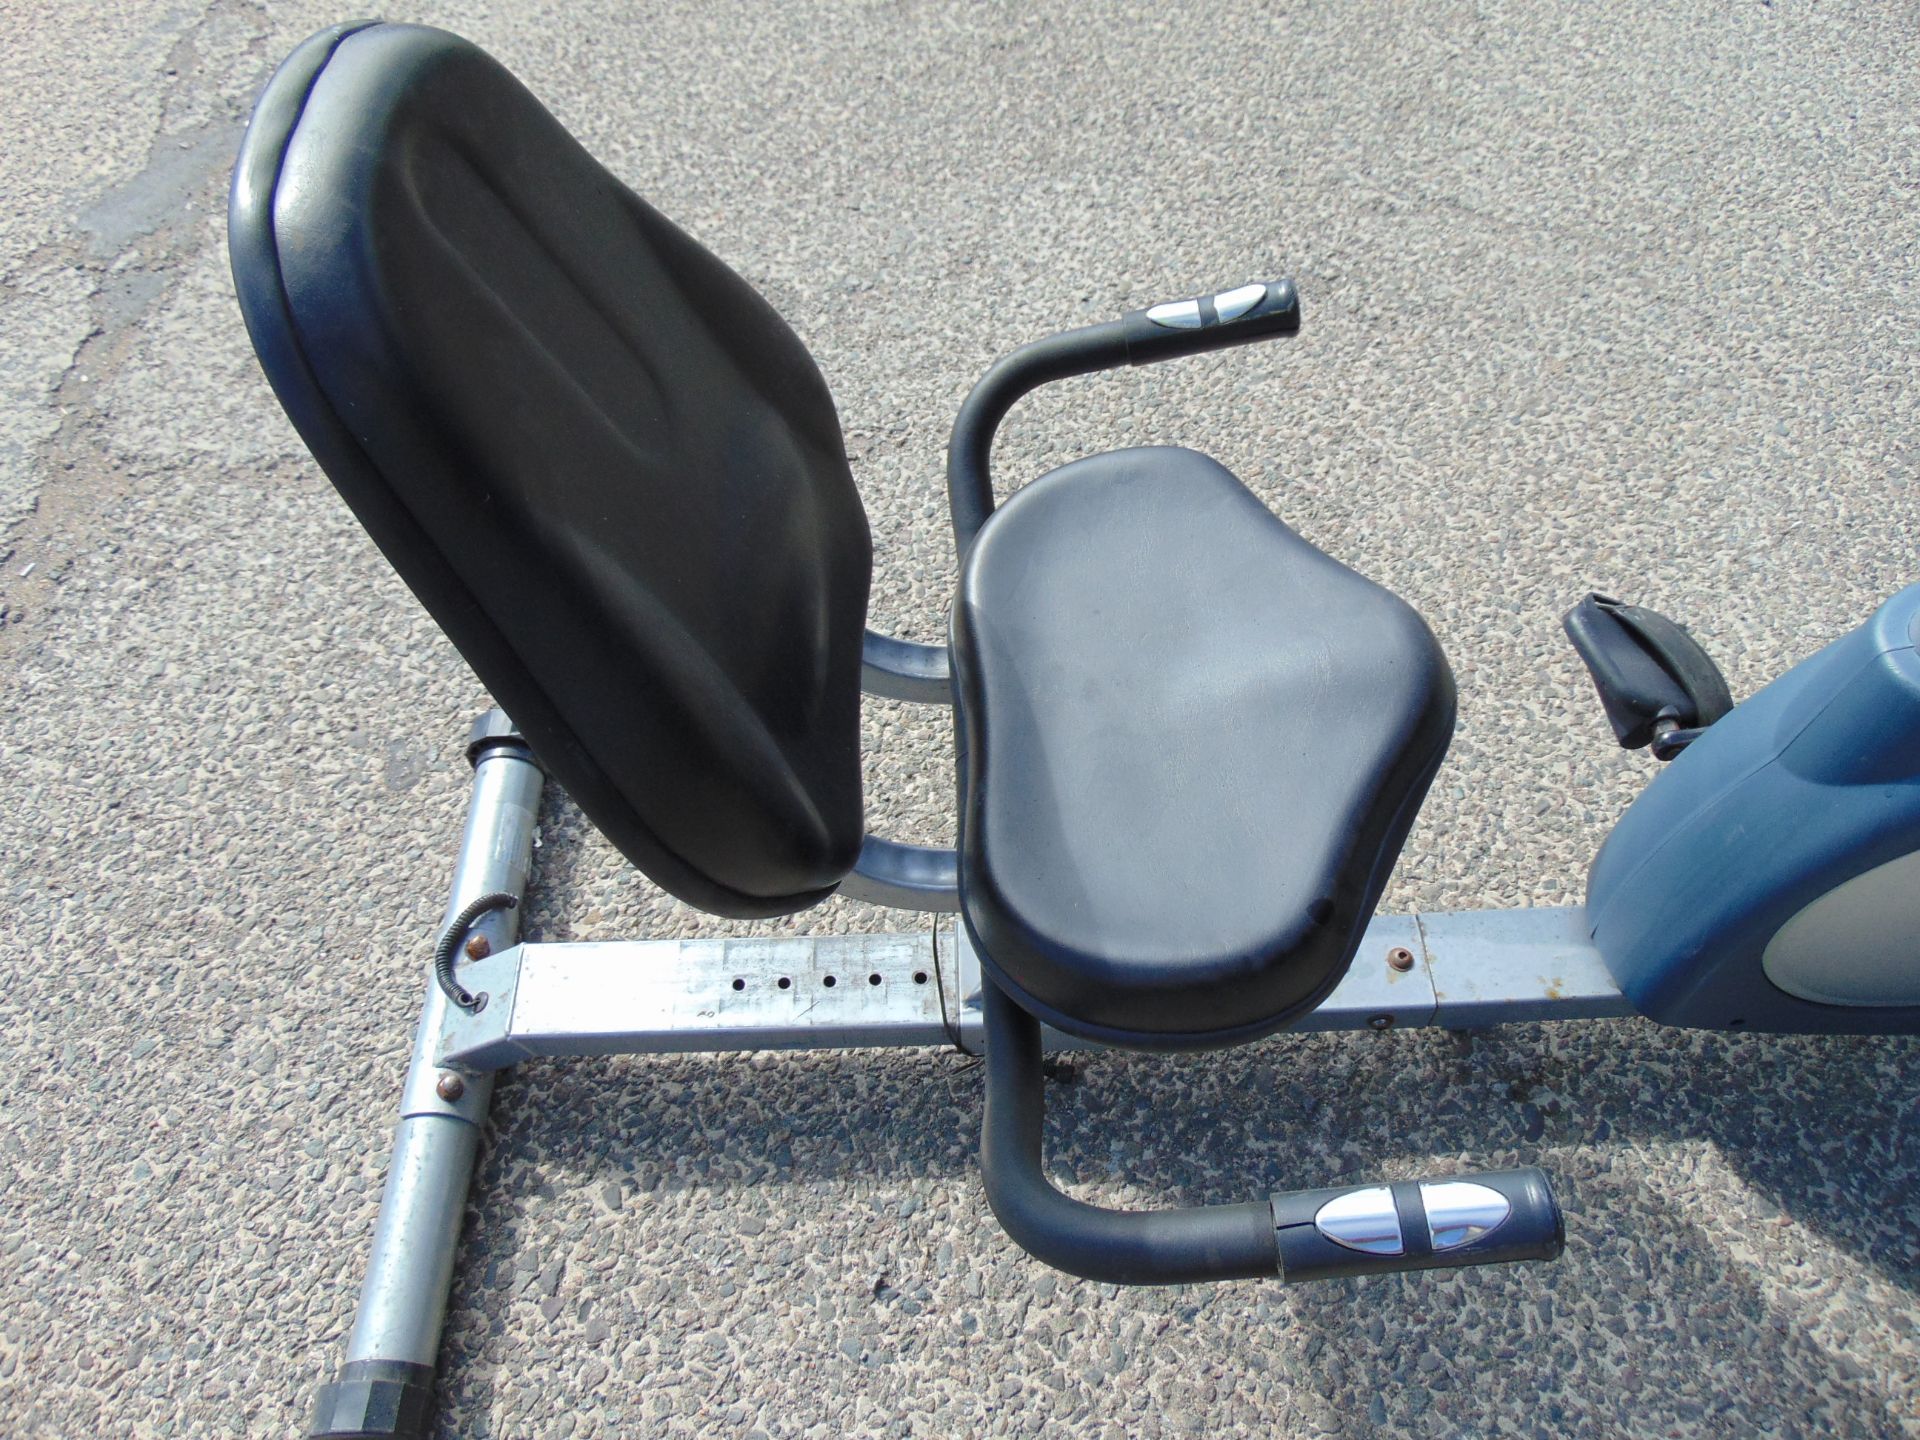 Carl Lewis EMR17 Magnetic Recumbent Exercise Bike - Image 5 of 9